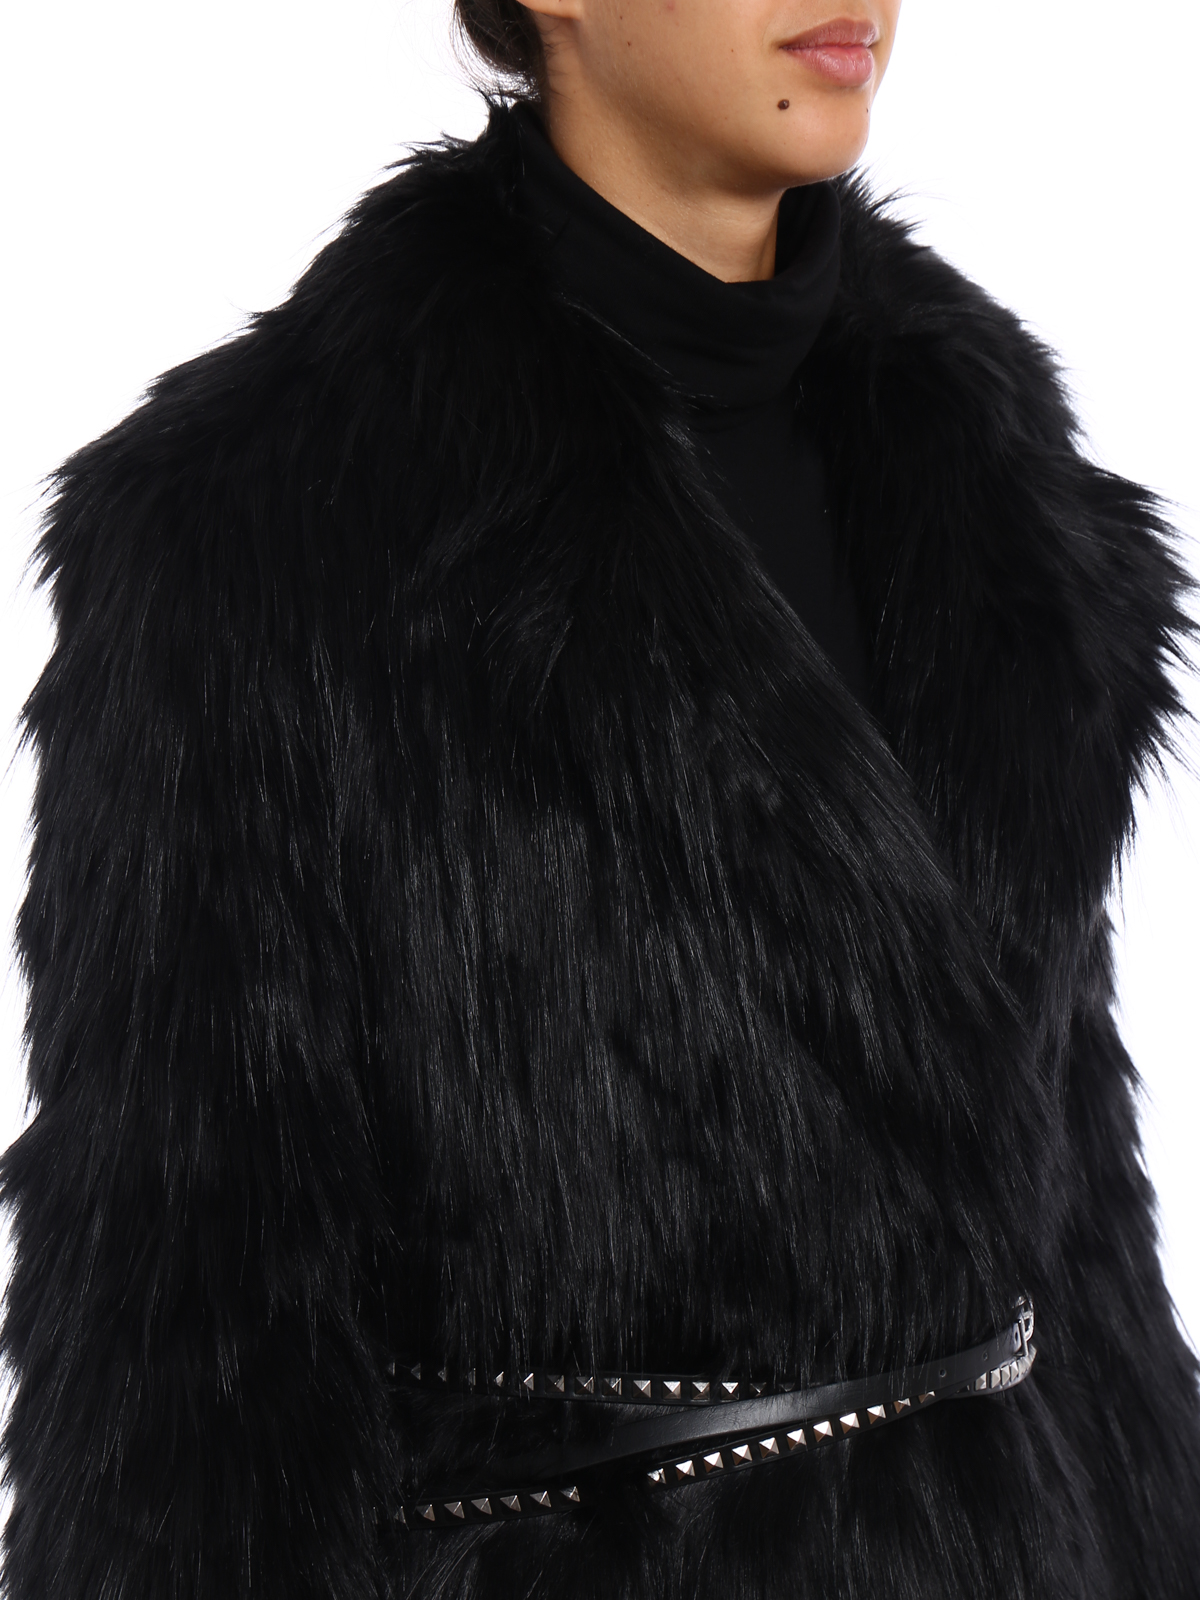 Michael Kors - Faux fur belted coat 